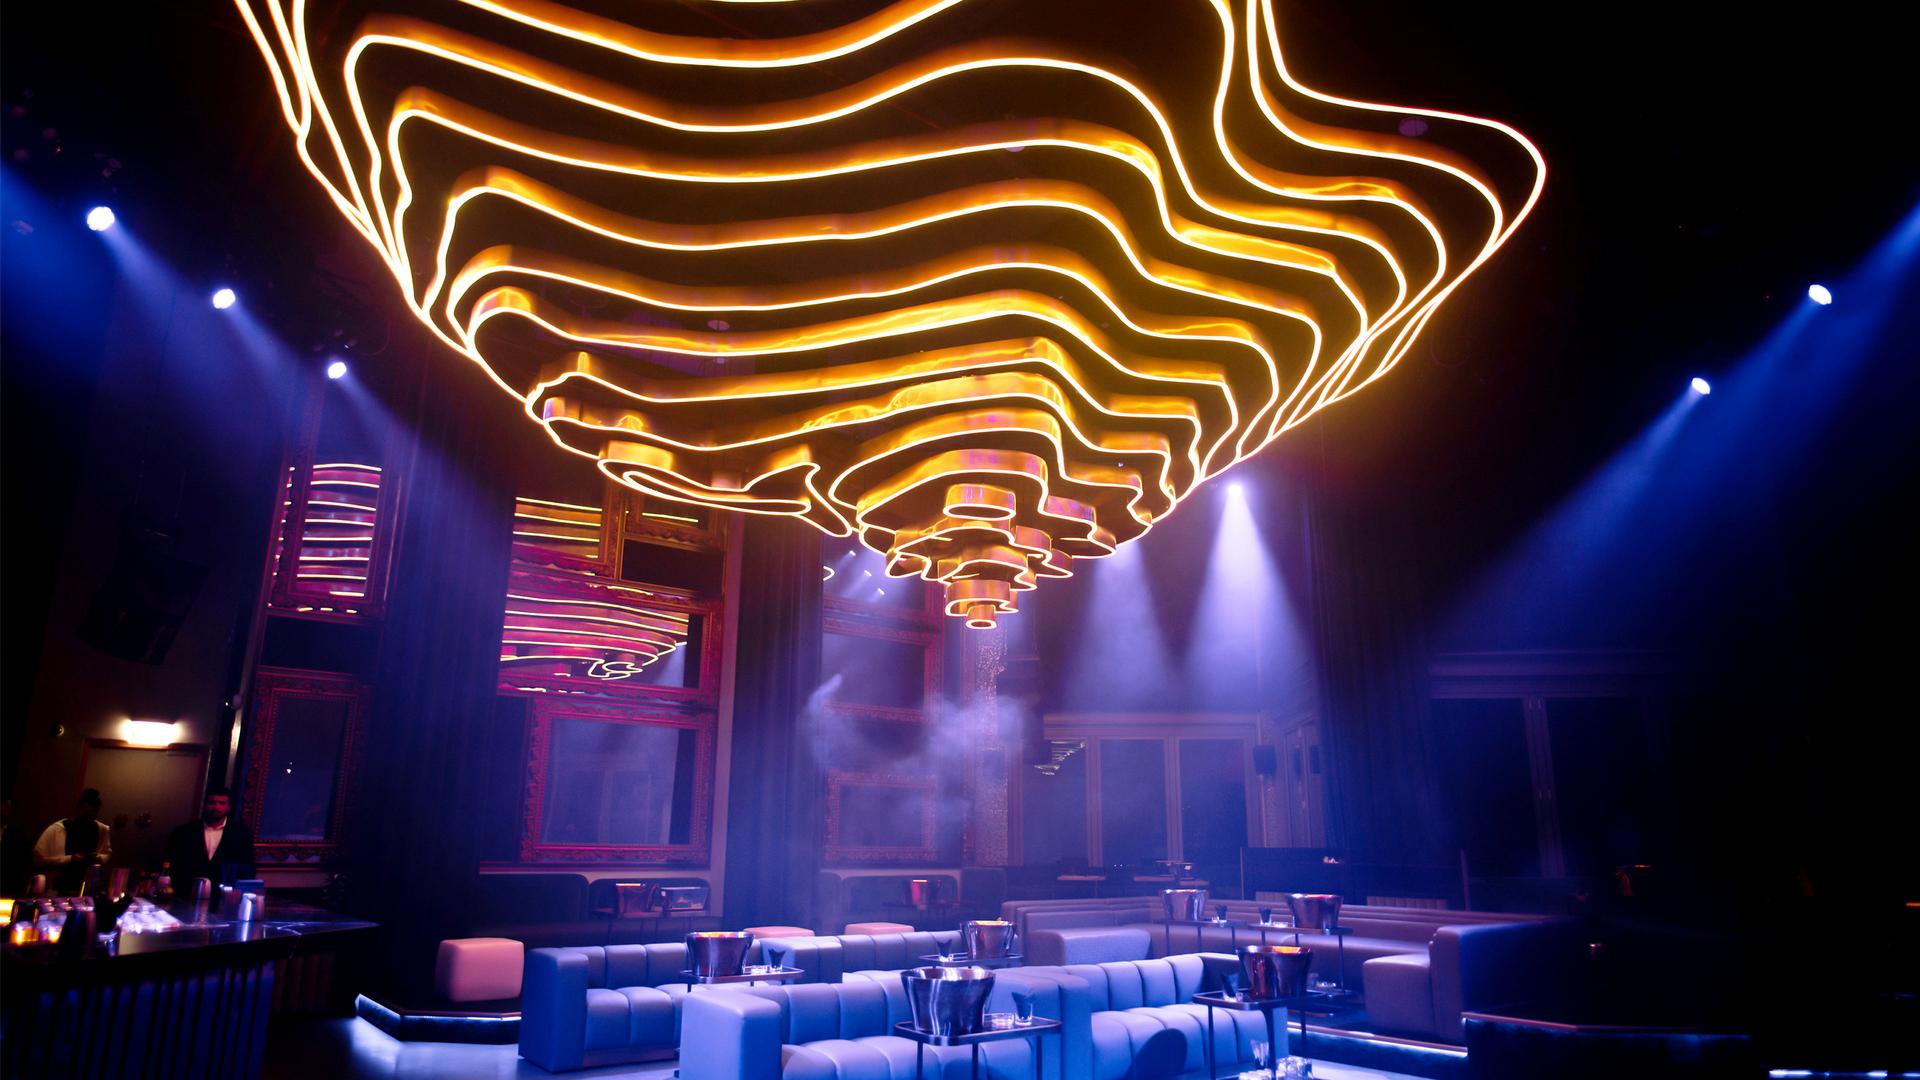 PROLIGHTS upgrades Privilege Club in Dubai with stunning illumination